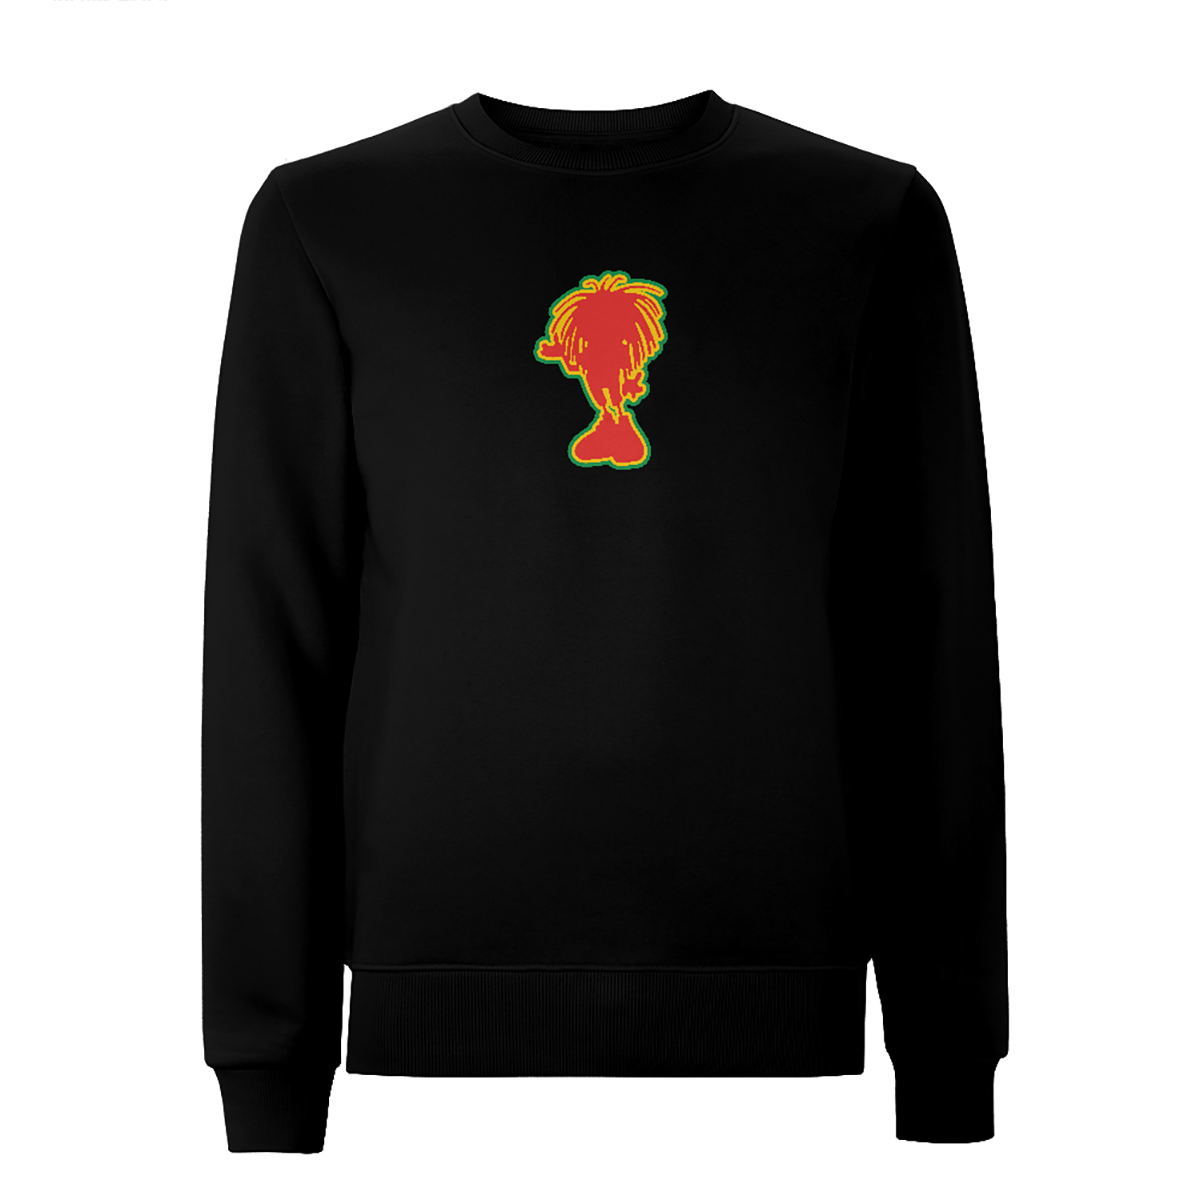 Sista silhouette, embroidered sweatshirt